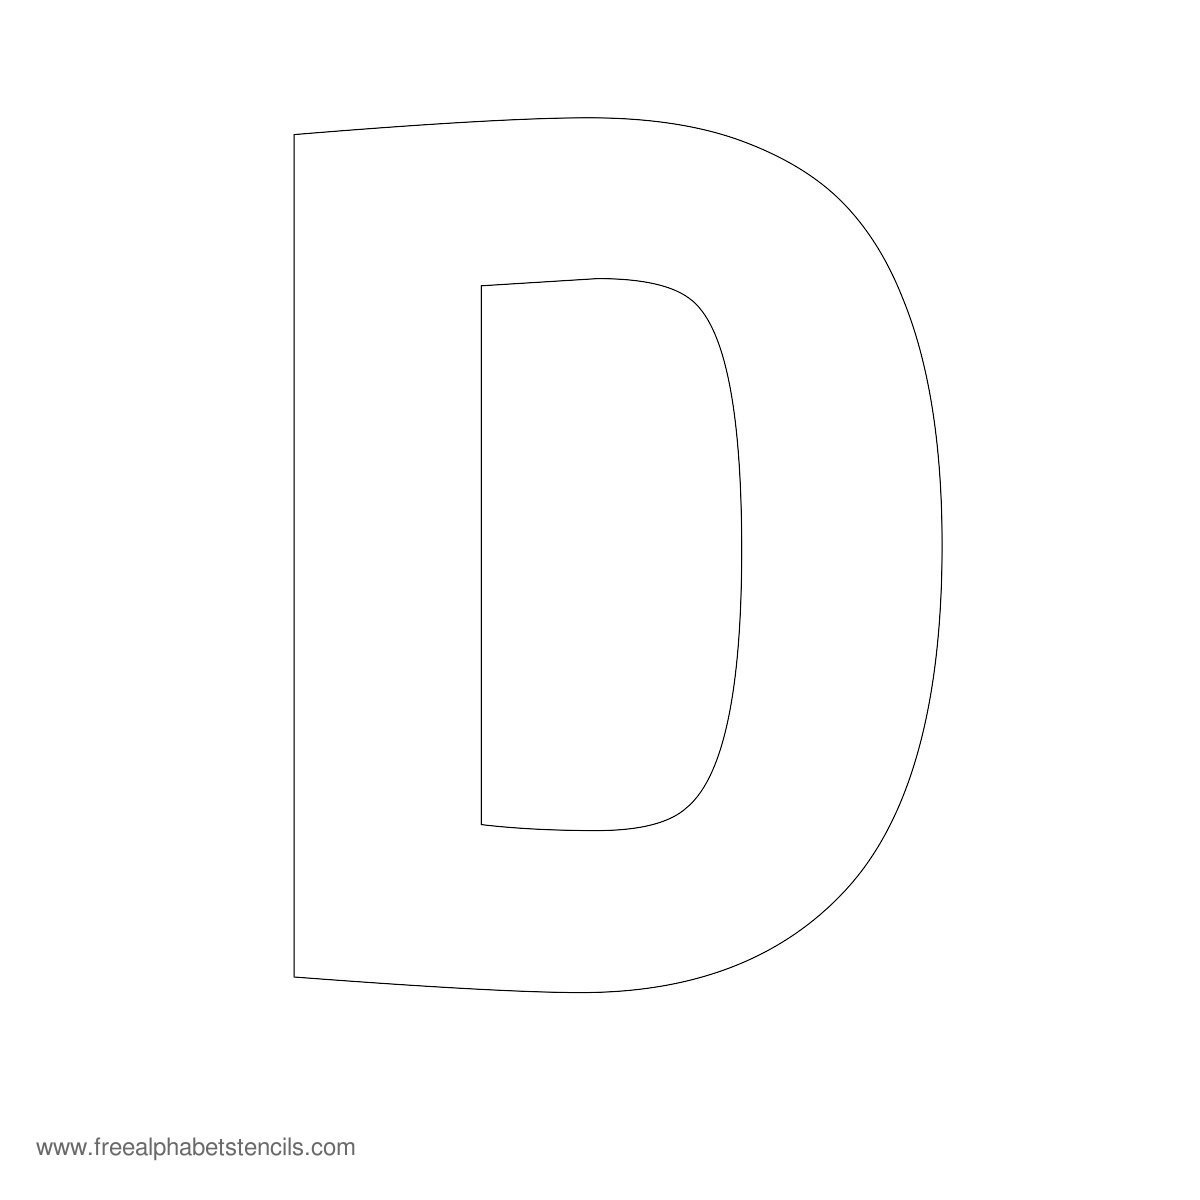 Large Alphabet Stencils | Freealphabetstencils - Online Letter Stencils Free Printable